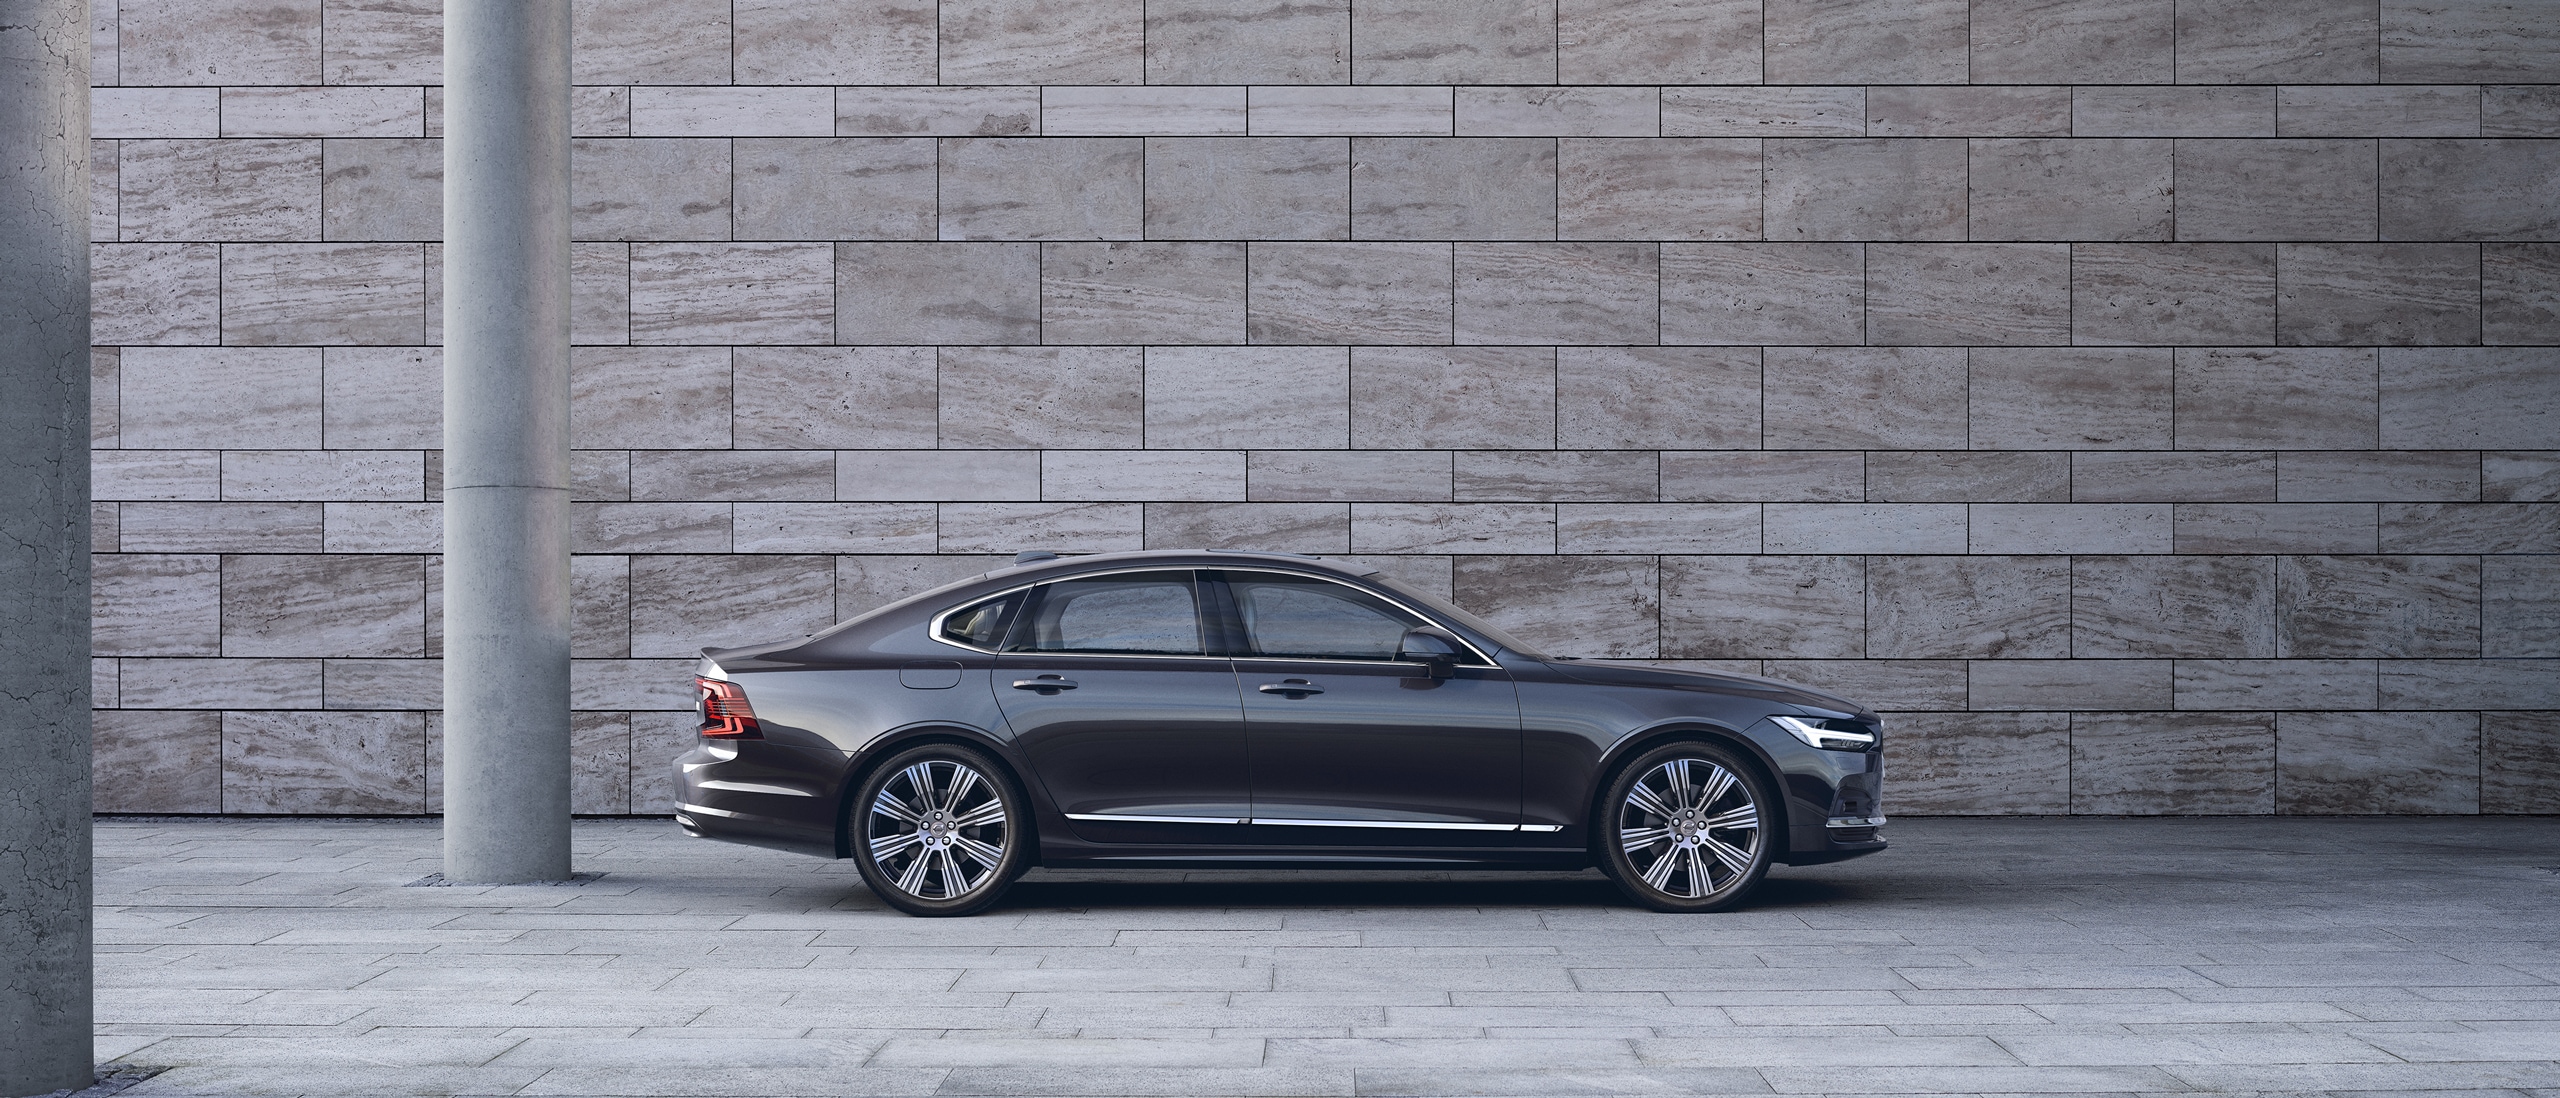 Bočni prikaz modela Volvo S90 parkiranog ispred sivog betonskog zida.